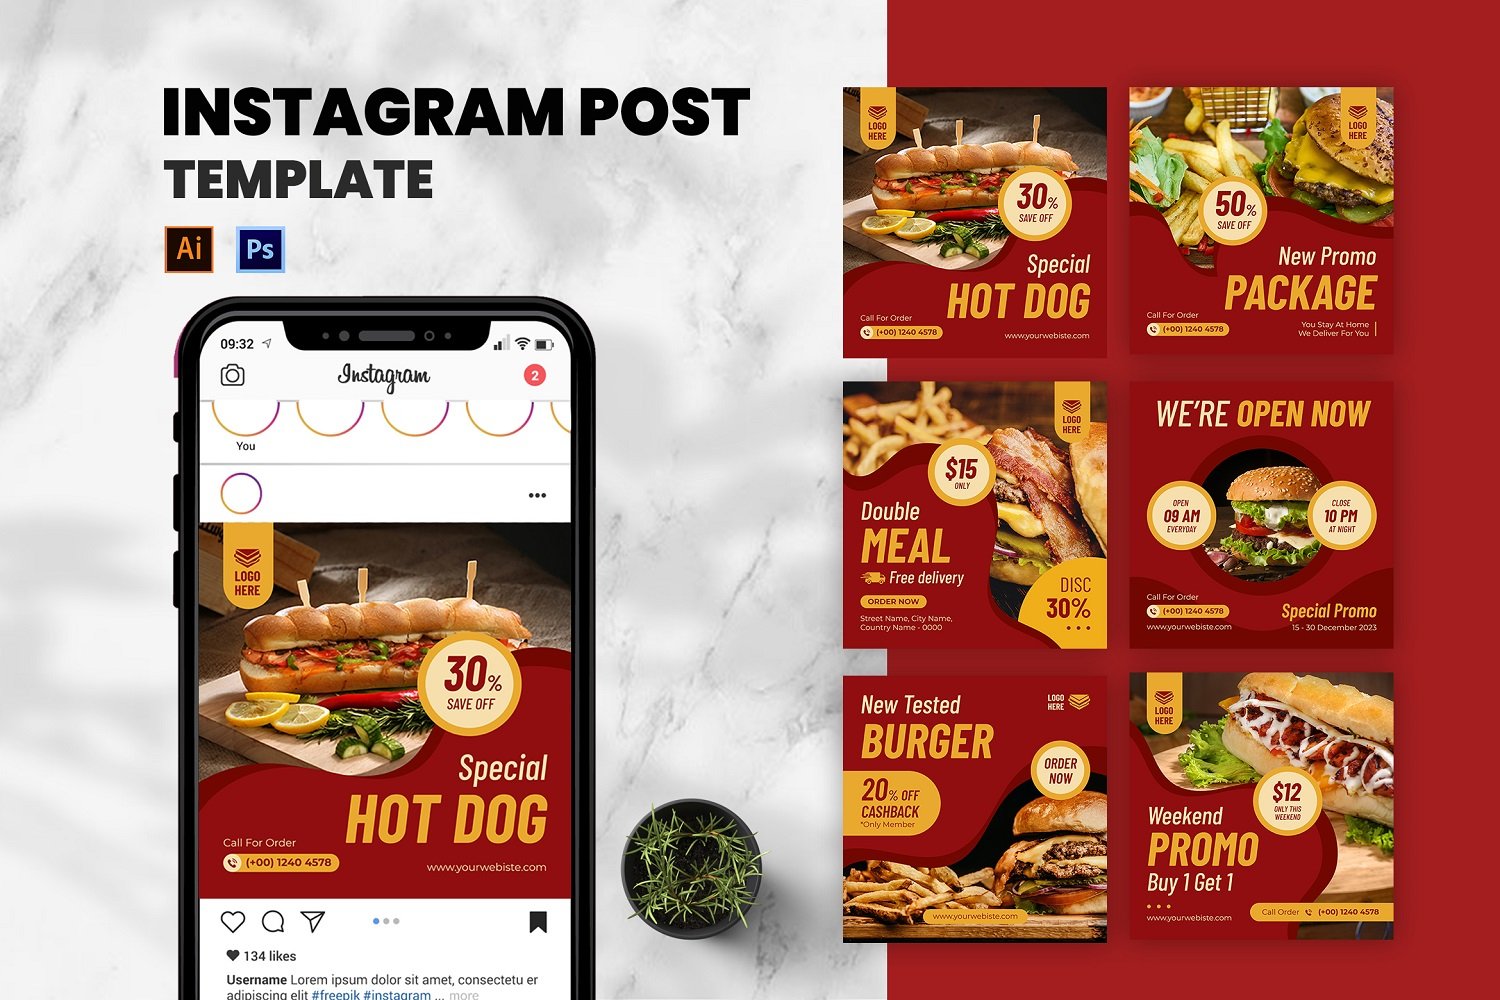 Fast Food Instagram Post Template